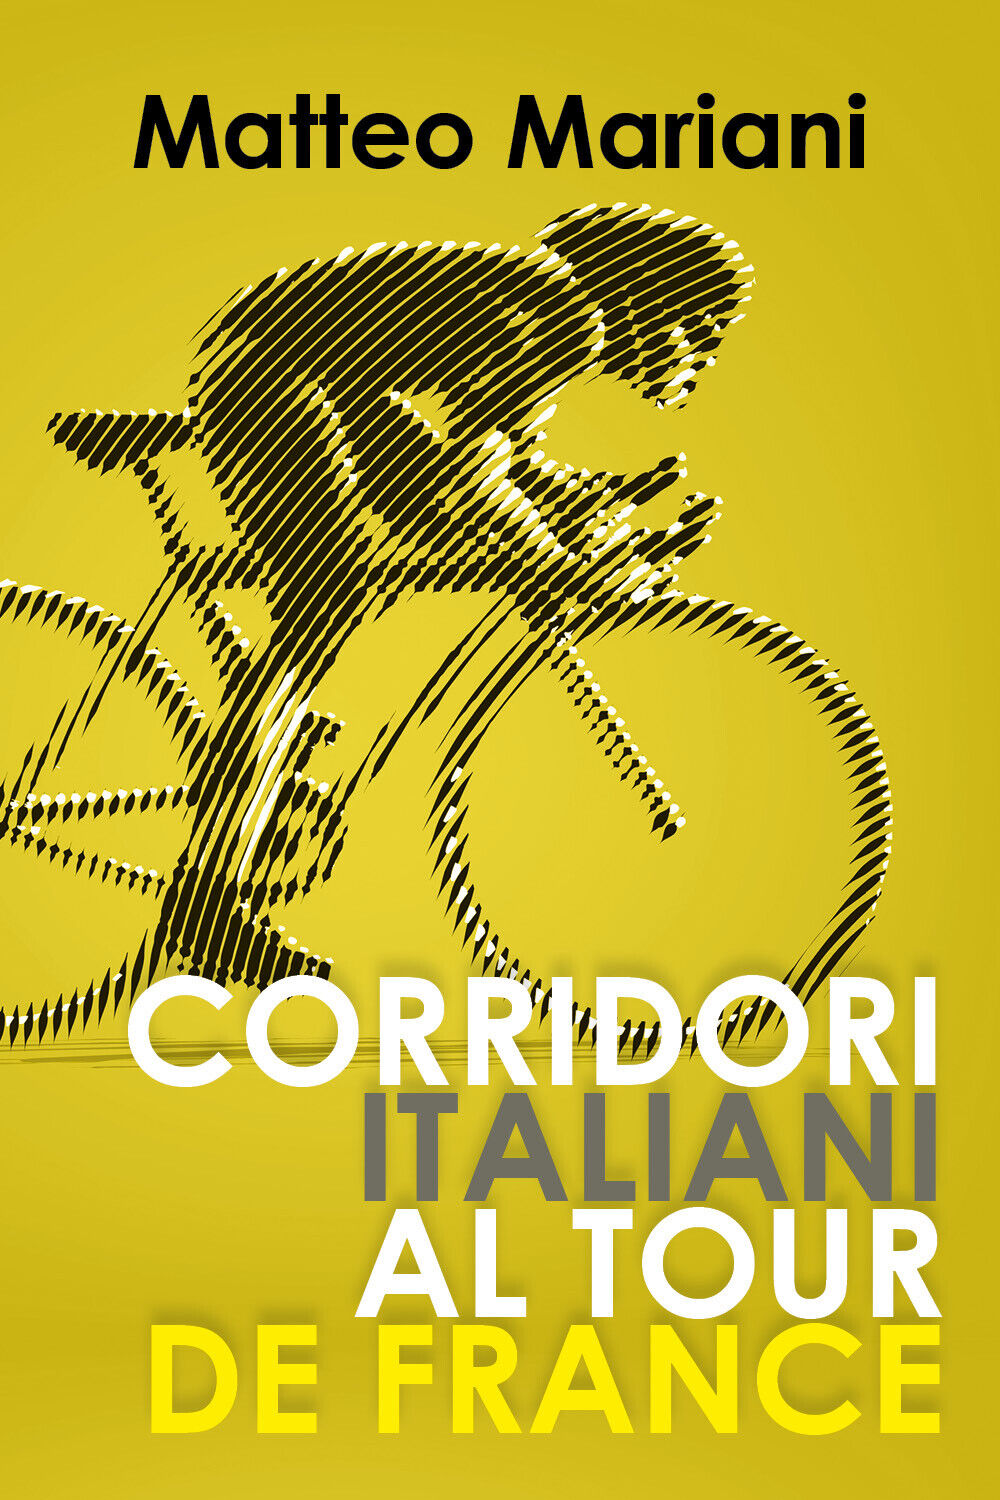 Corridori italiani al Tour de France - Matteo Mariani,  2019,  Youcanprint